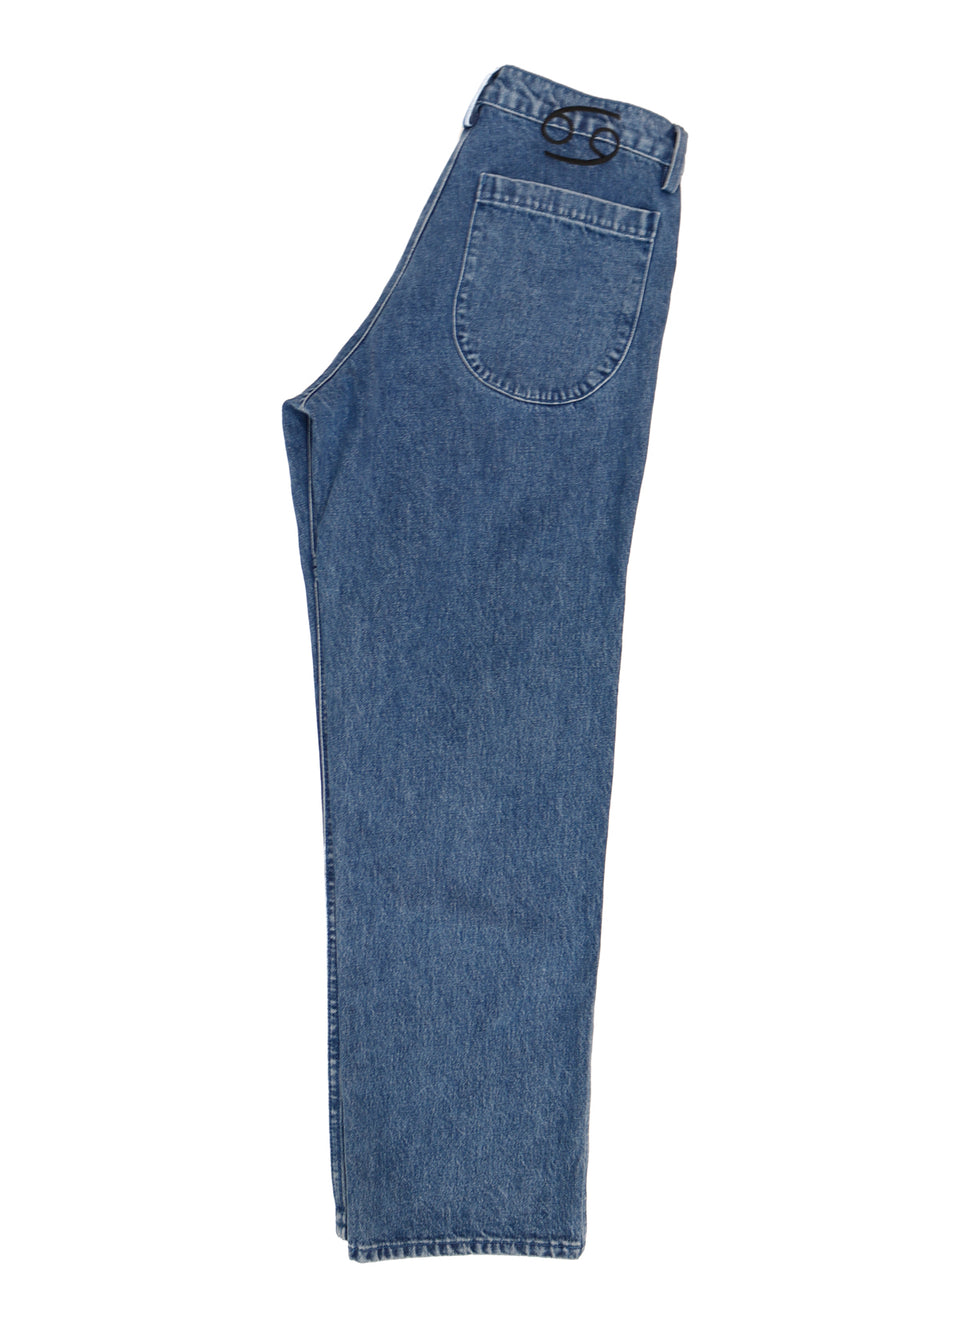 Slit Jeans - 69